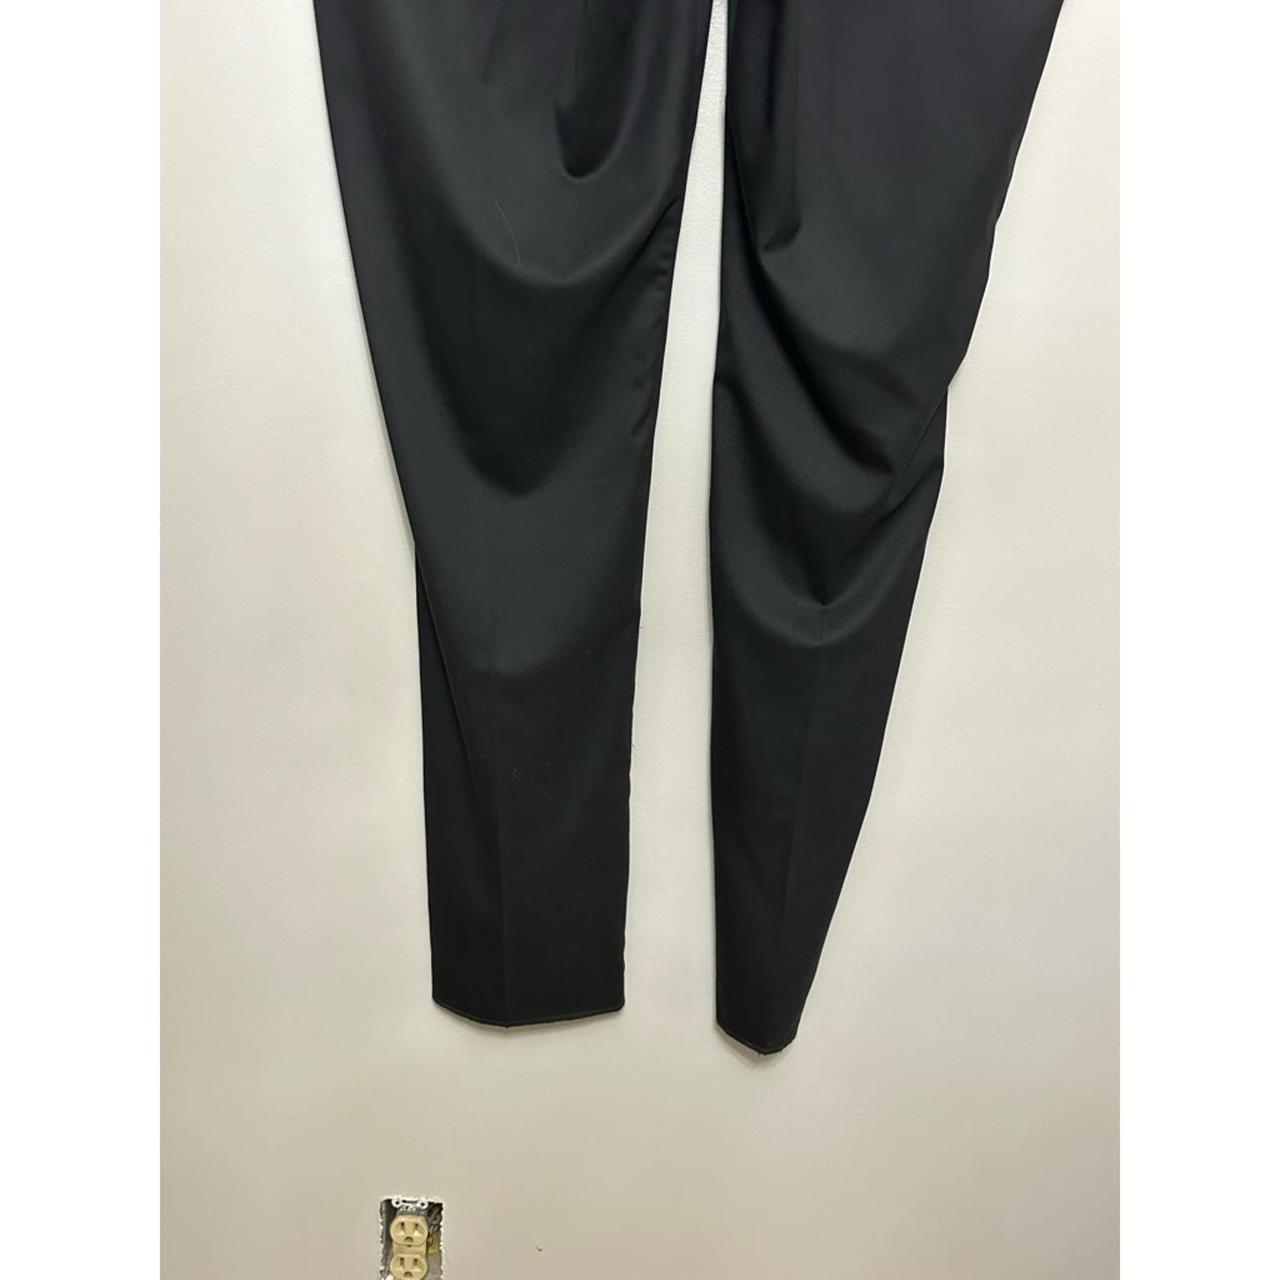 Nordstrom new with tags black dress pants trim fit  Depop